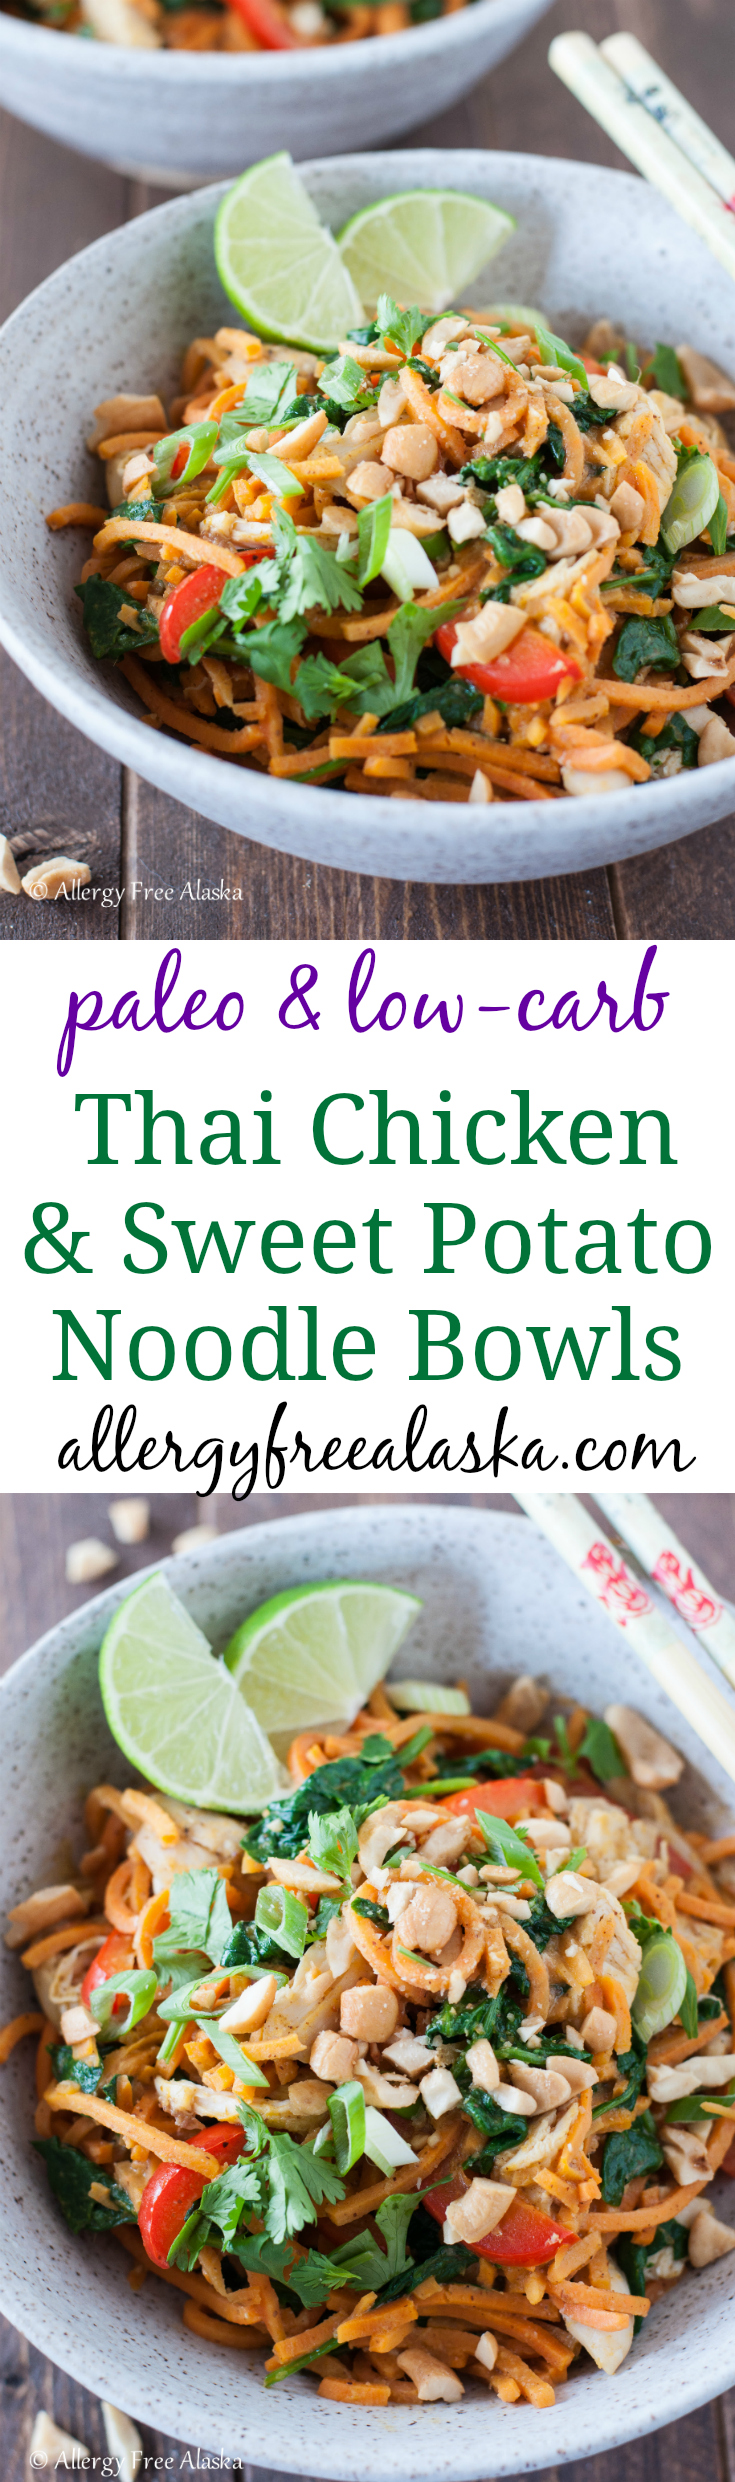 Thai Chicken & Sweet Potato Noodle Bowls Recipe